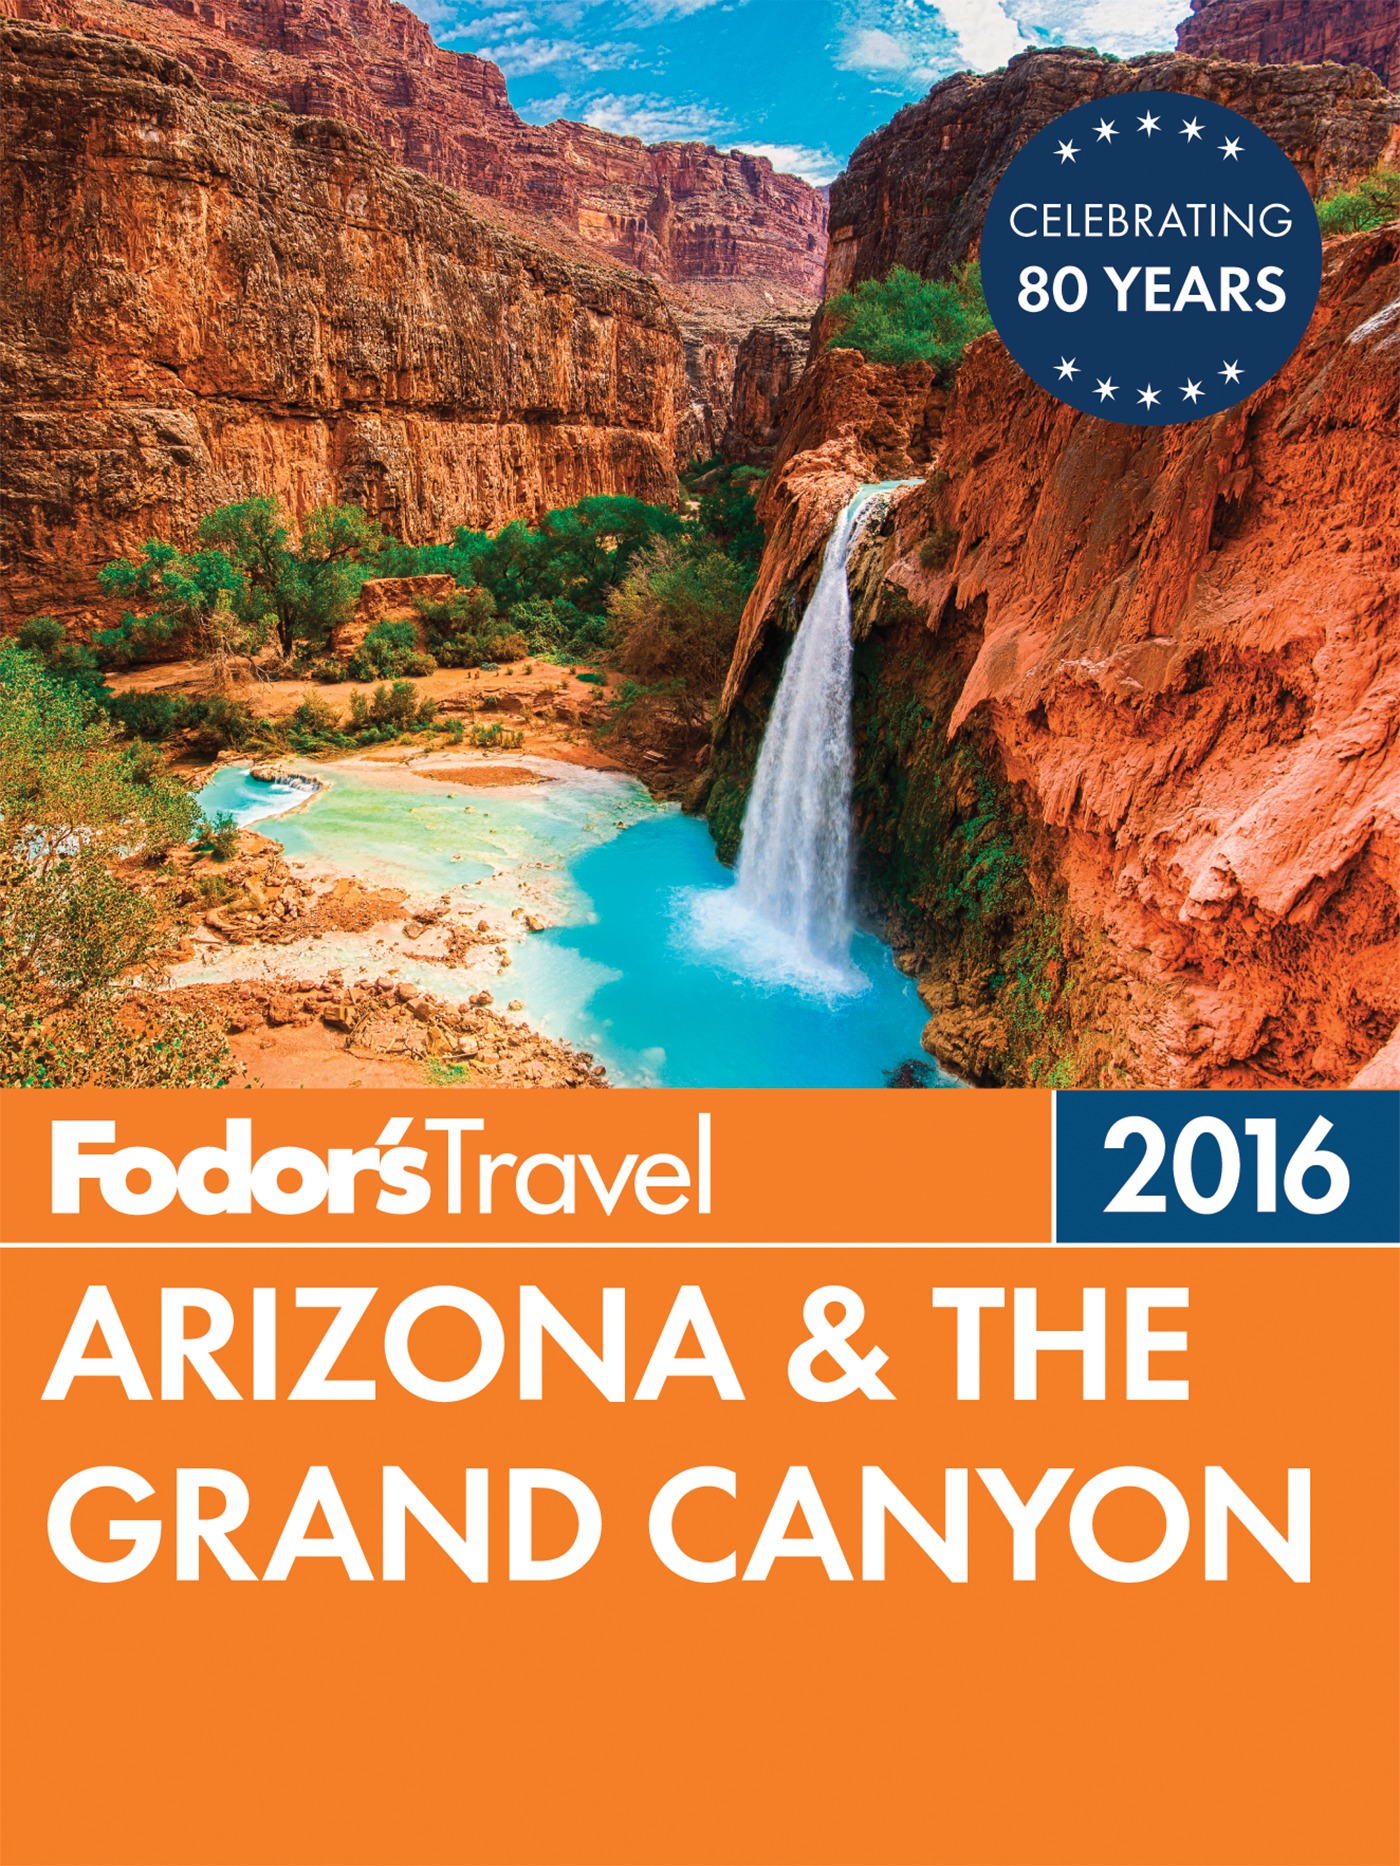 Fodor's Arizona & the Grand Canyon 2016 cover image